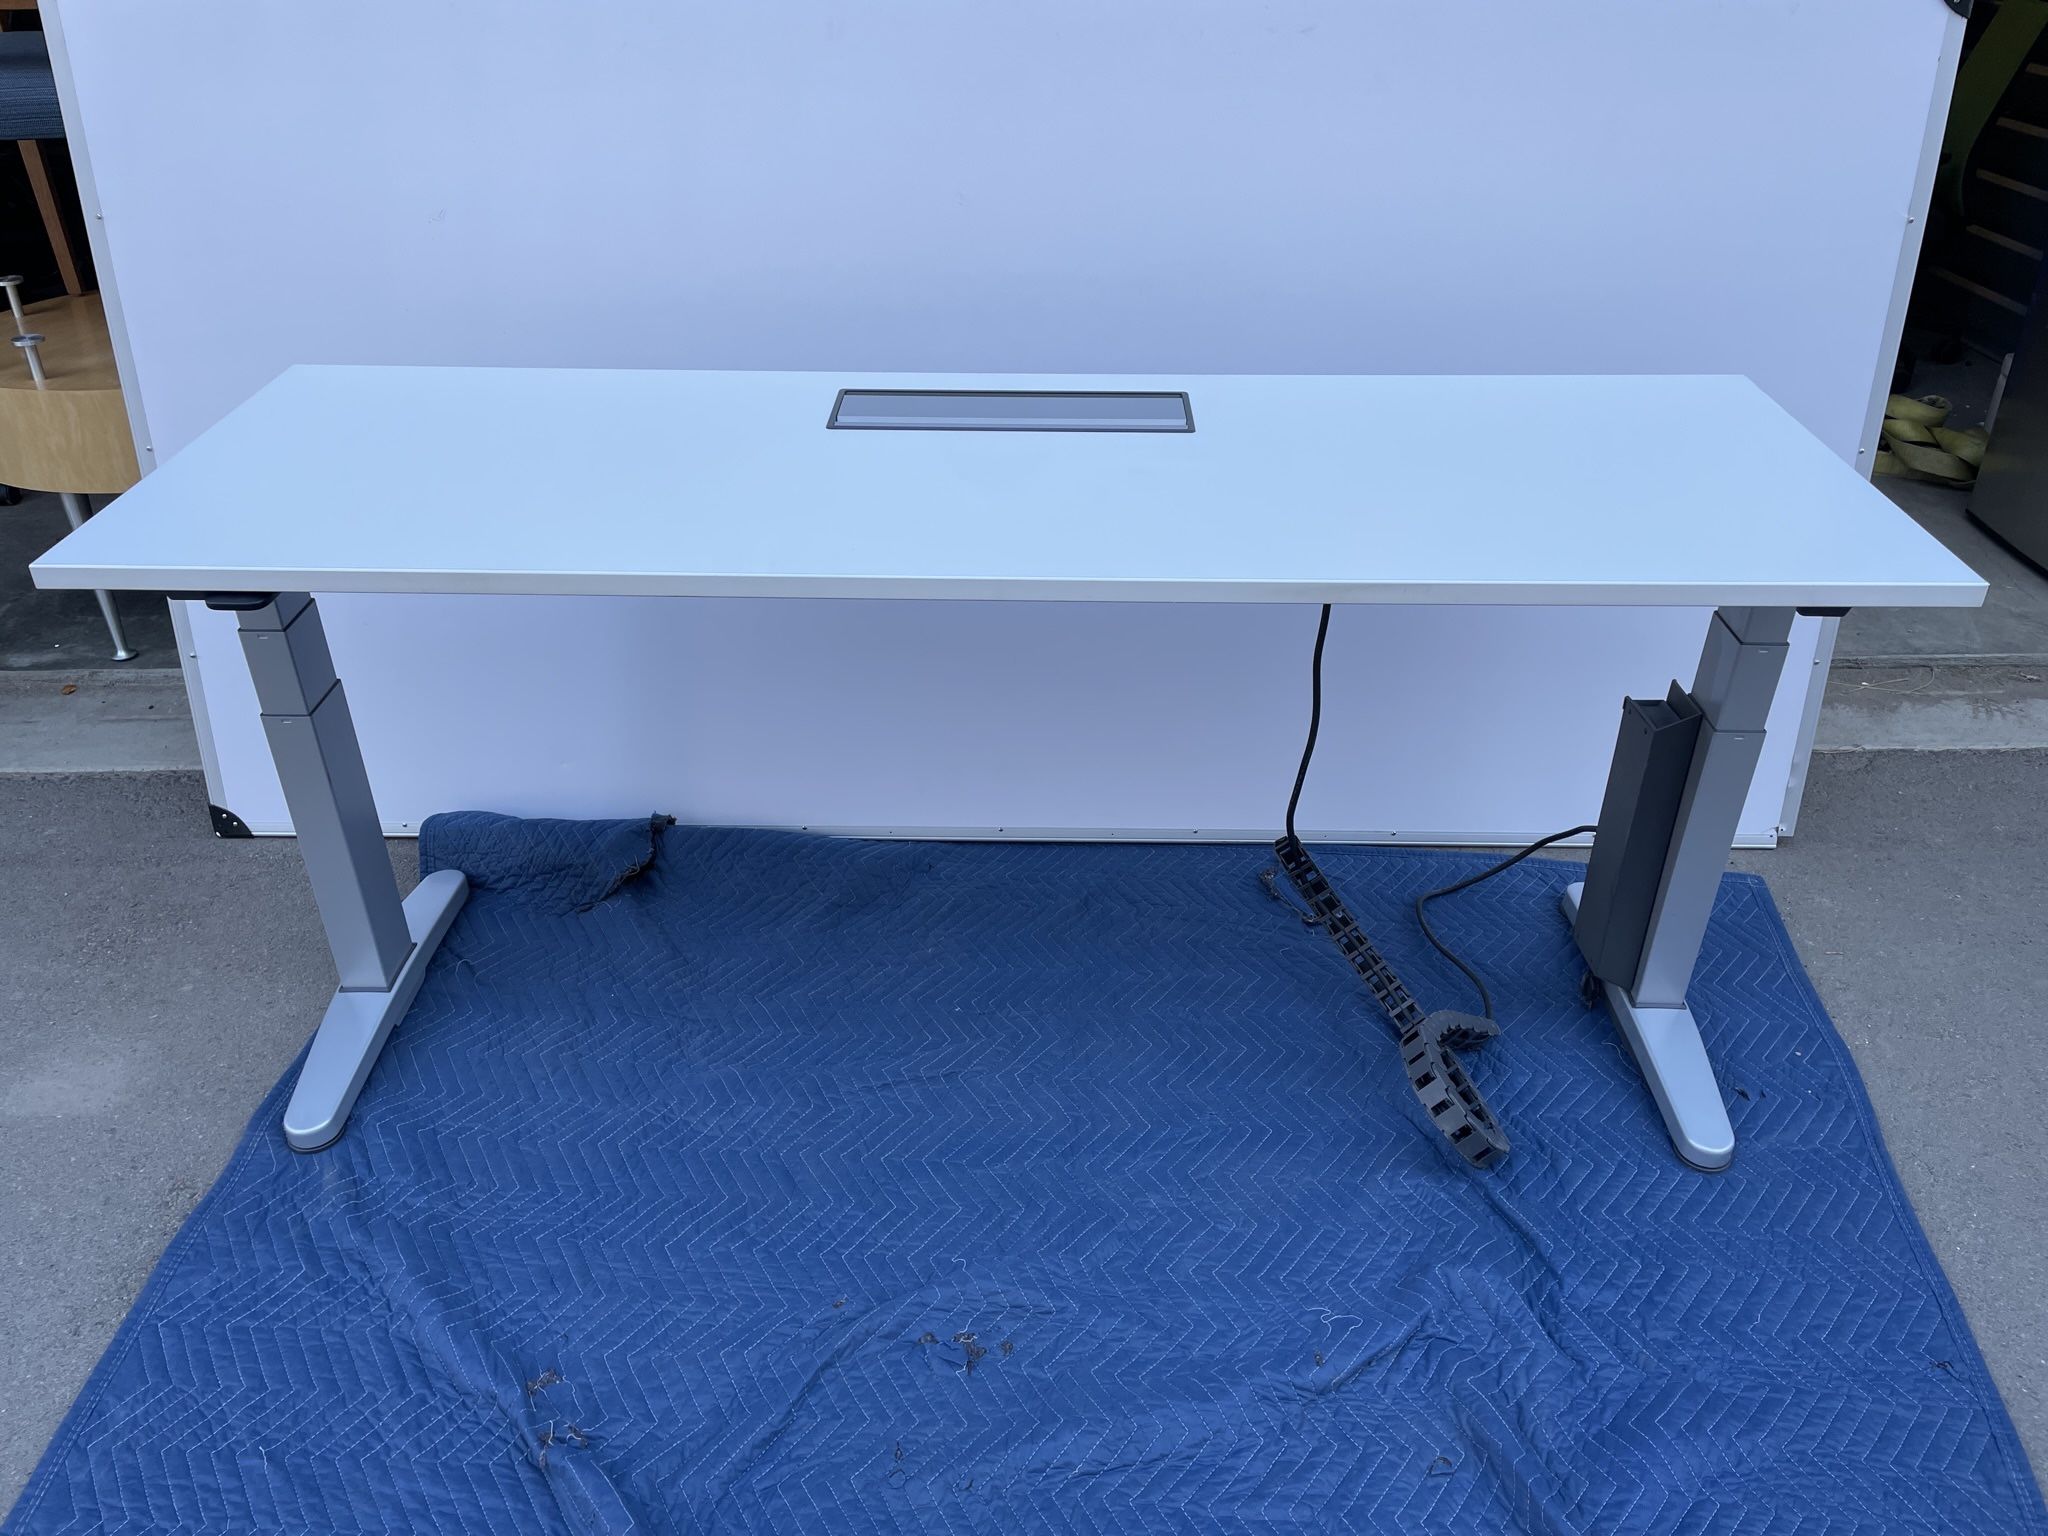 Height Adjustable Desk Steelcase